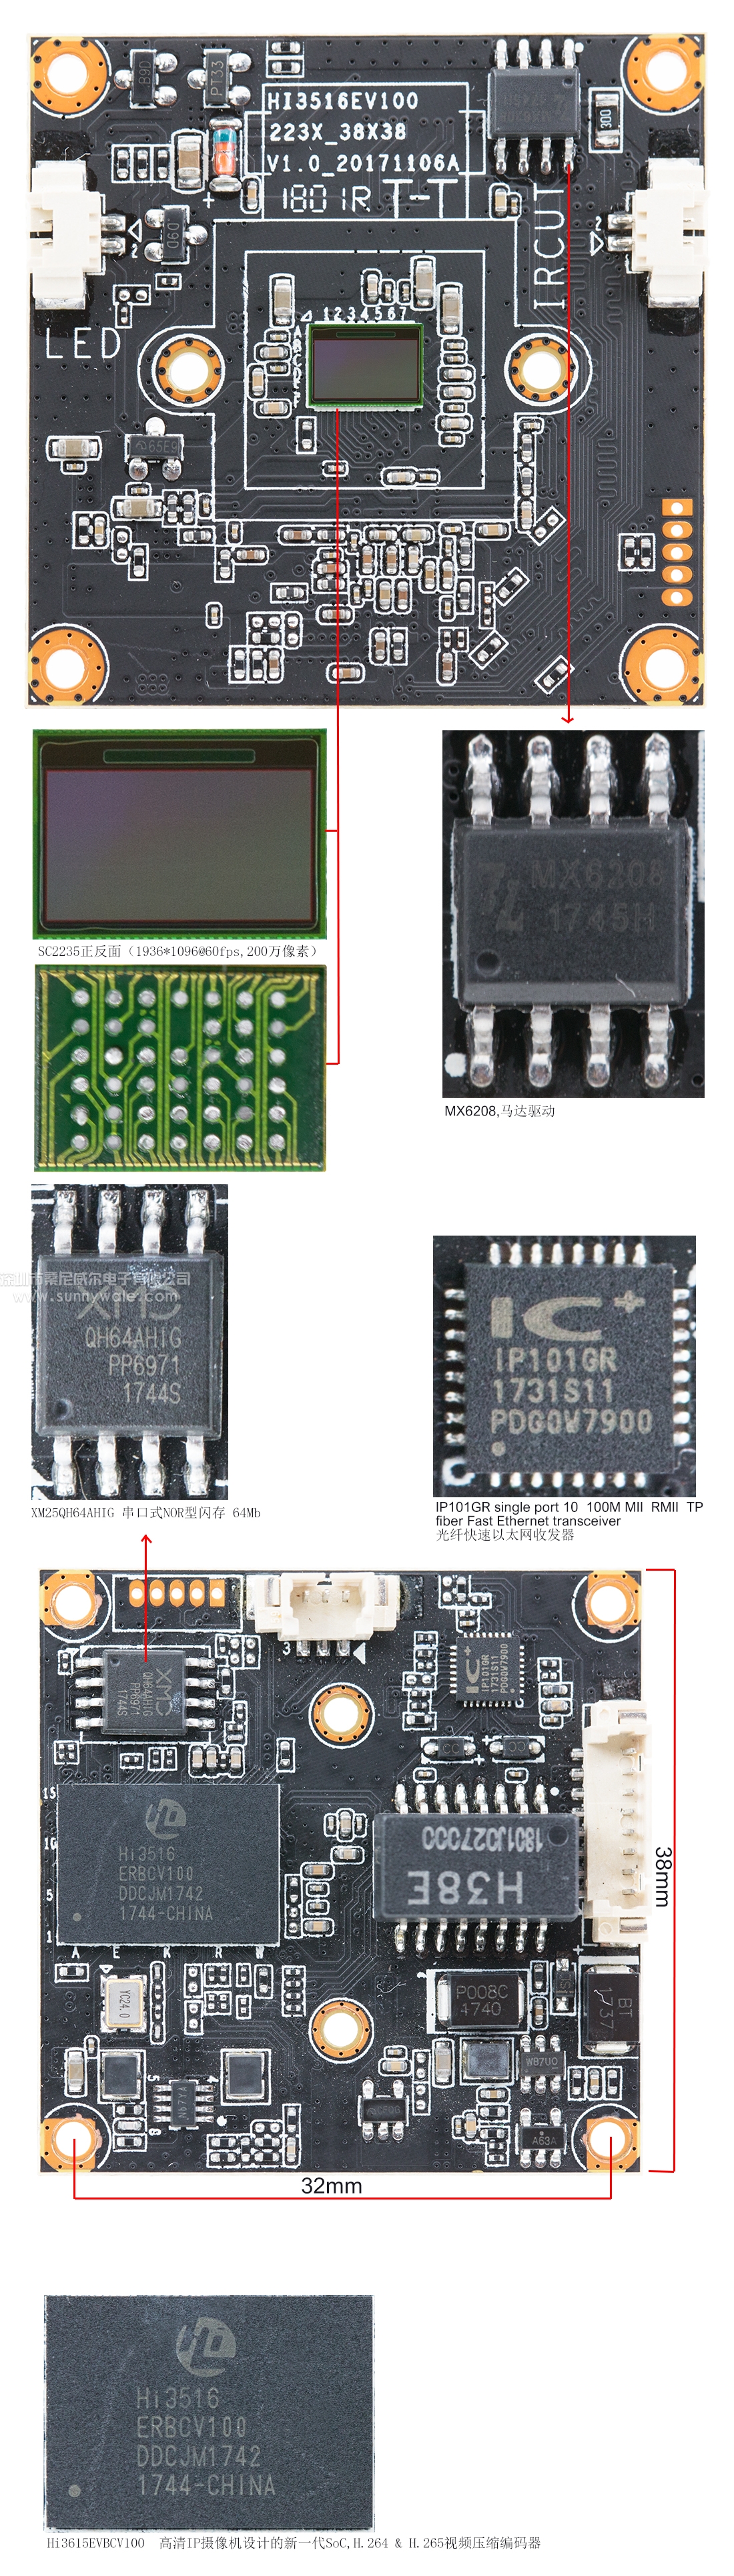 HI3516ERBCV100 SoC,SC2235H,MX6208,XM25QH64AHIG,IP101G，Hisilicon SoC, HI3516EV100+SC2235 security camera module,32X32mm，2MP camera mianbroad，SMARTsens CMOS sensor，SC2235 ，2MP camera module,H.265 compression chip, H.264 encoder IC